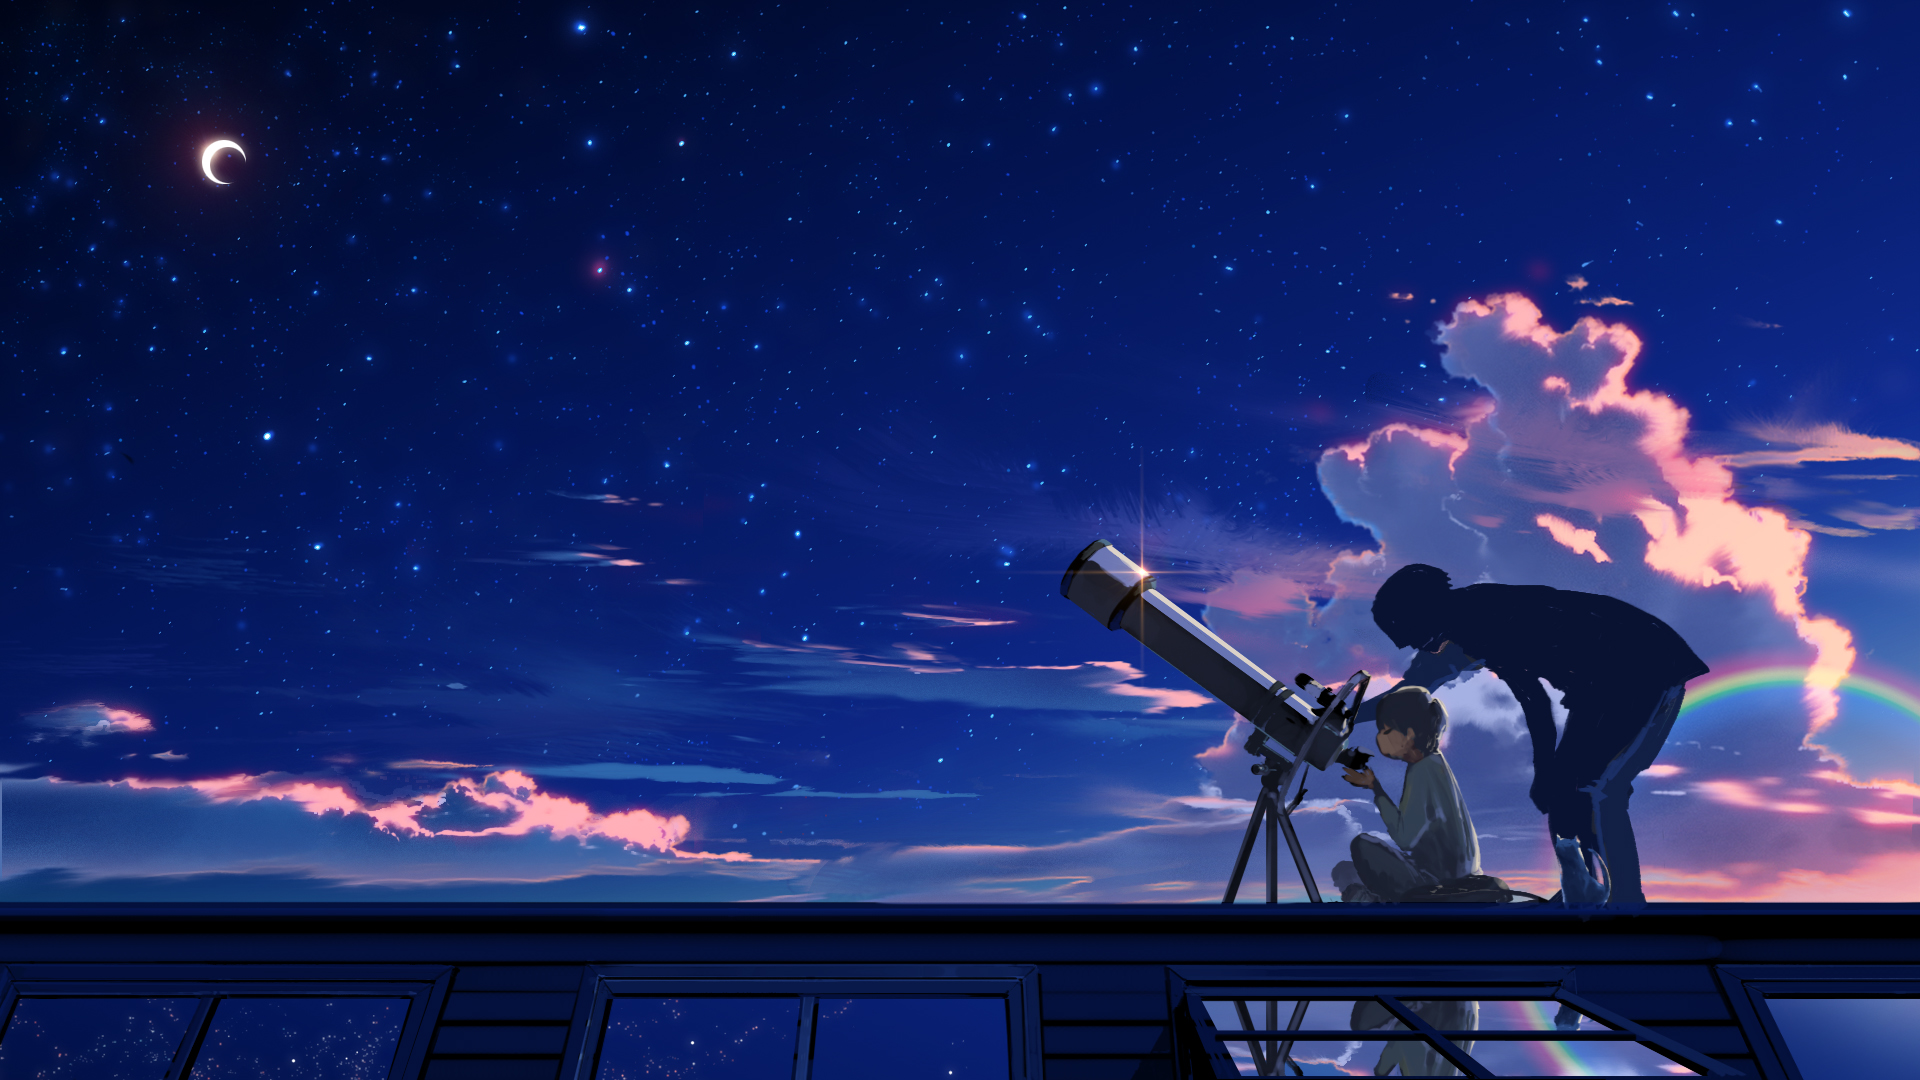 Night Telescope 1920x1080